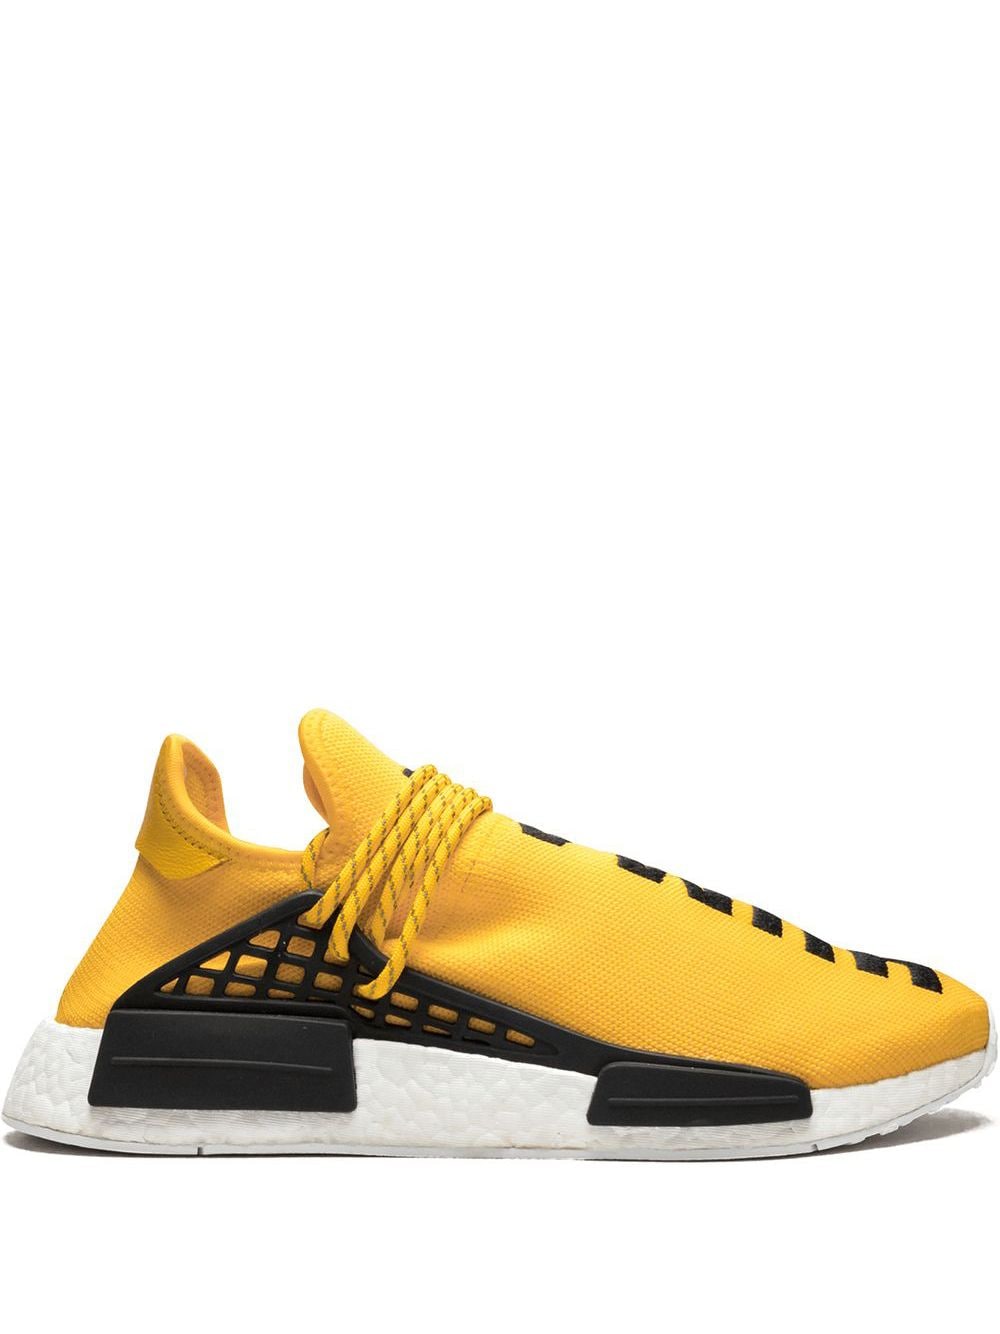 adidas x Pharrell PW Human Race NMD sneakers - Yellow von adidas